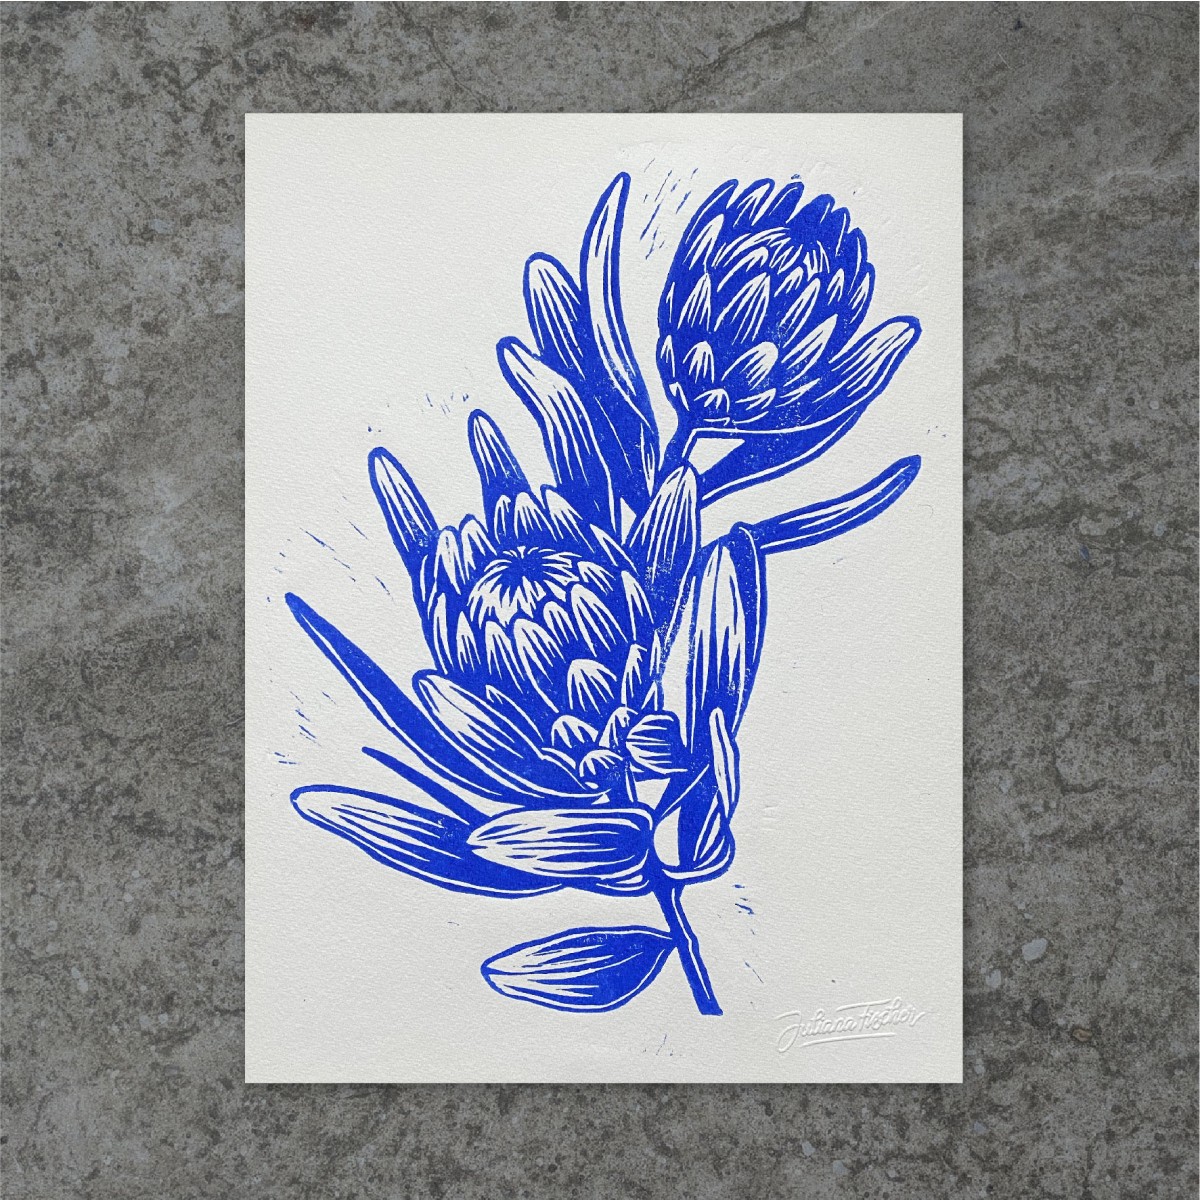 Juliana Fischer - Protea - Linoldruck, ultramarinblau, 22,8 x 30,6 cm